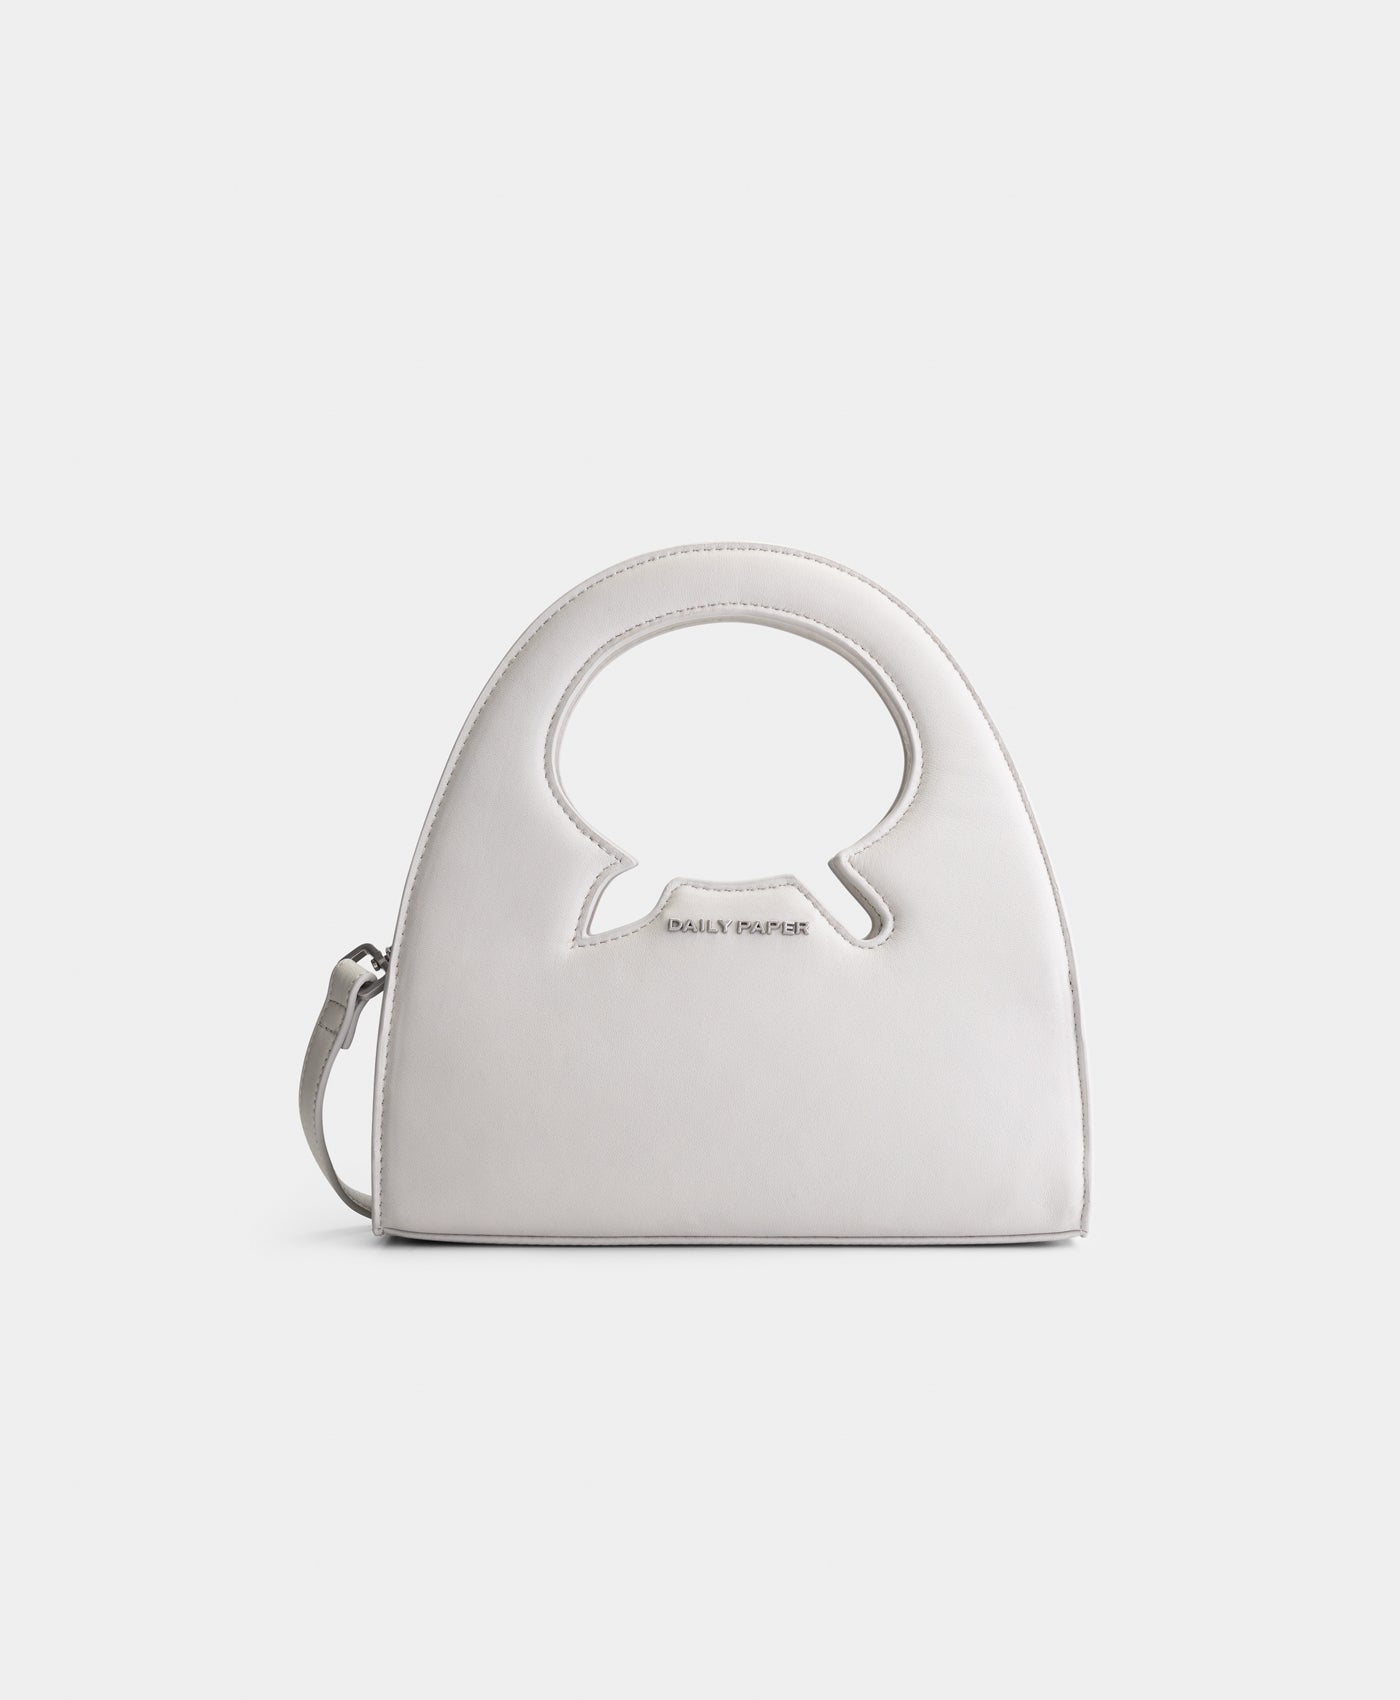 DP - Moonstruck Grey Codu Small Bag - Packshot - Front 